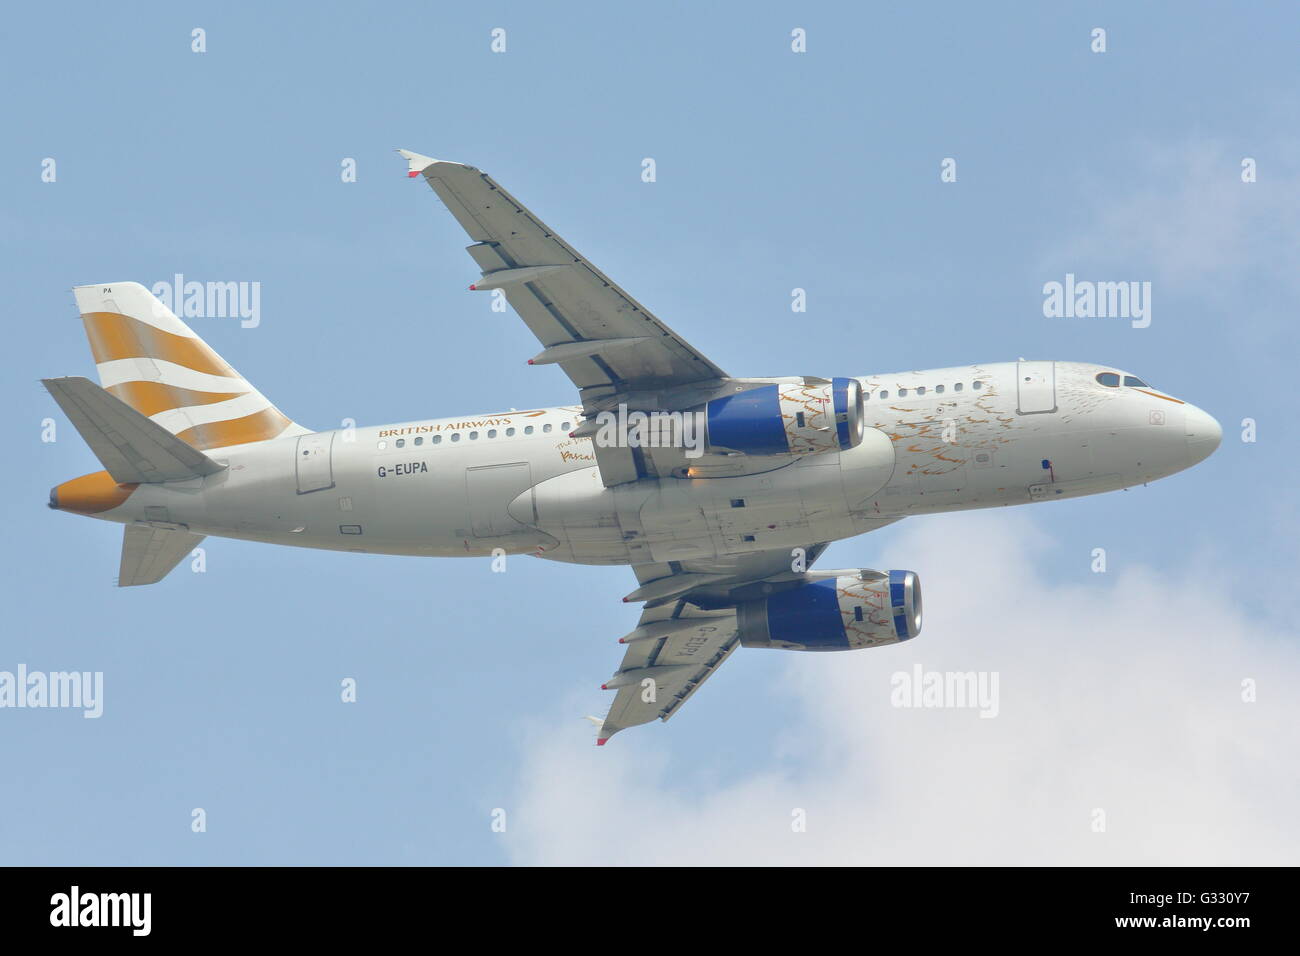 British Airways Airbus A319 G-EUPA departing from London Heathrow Airport, UK Stock Photo